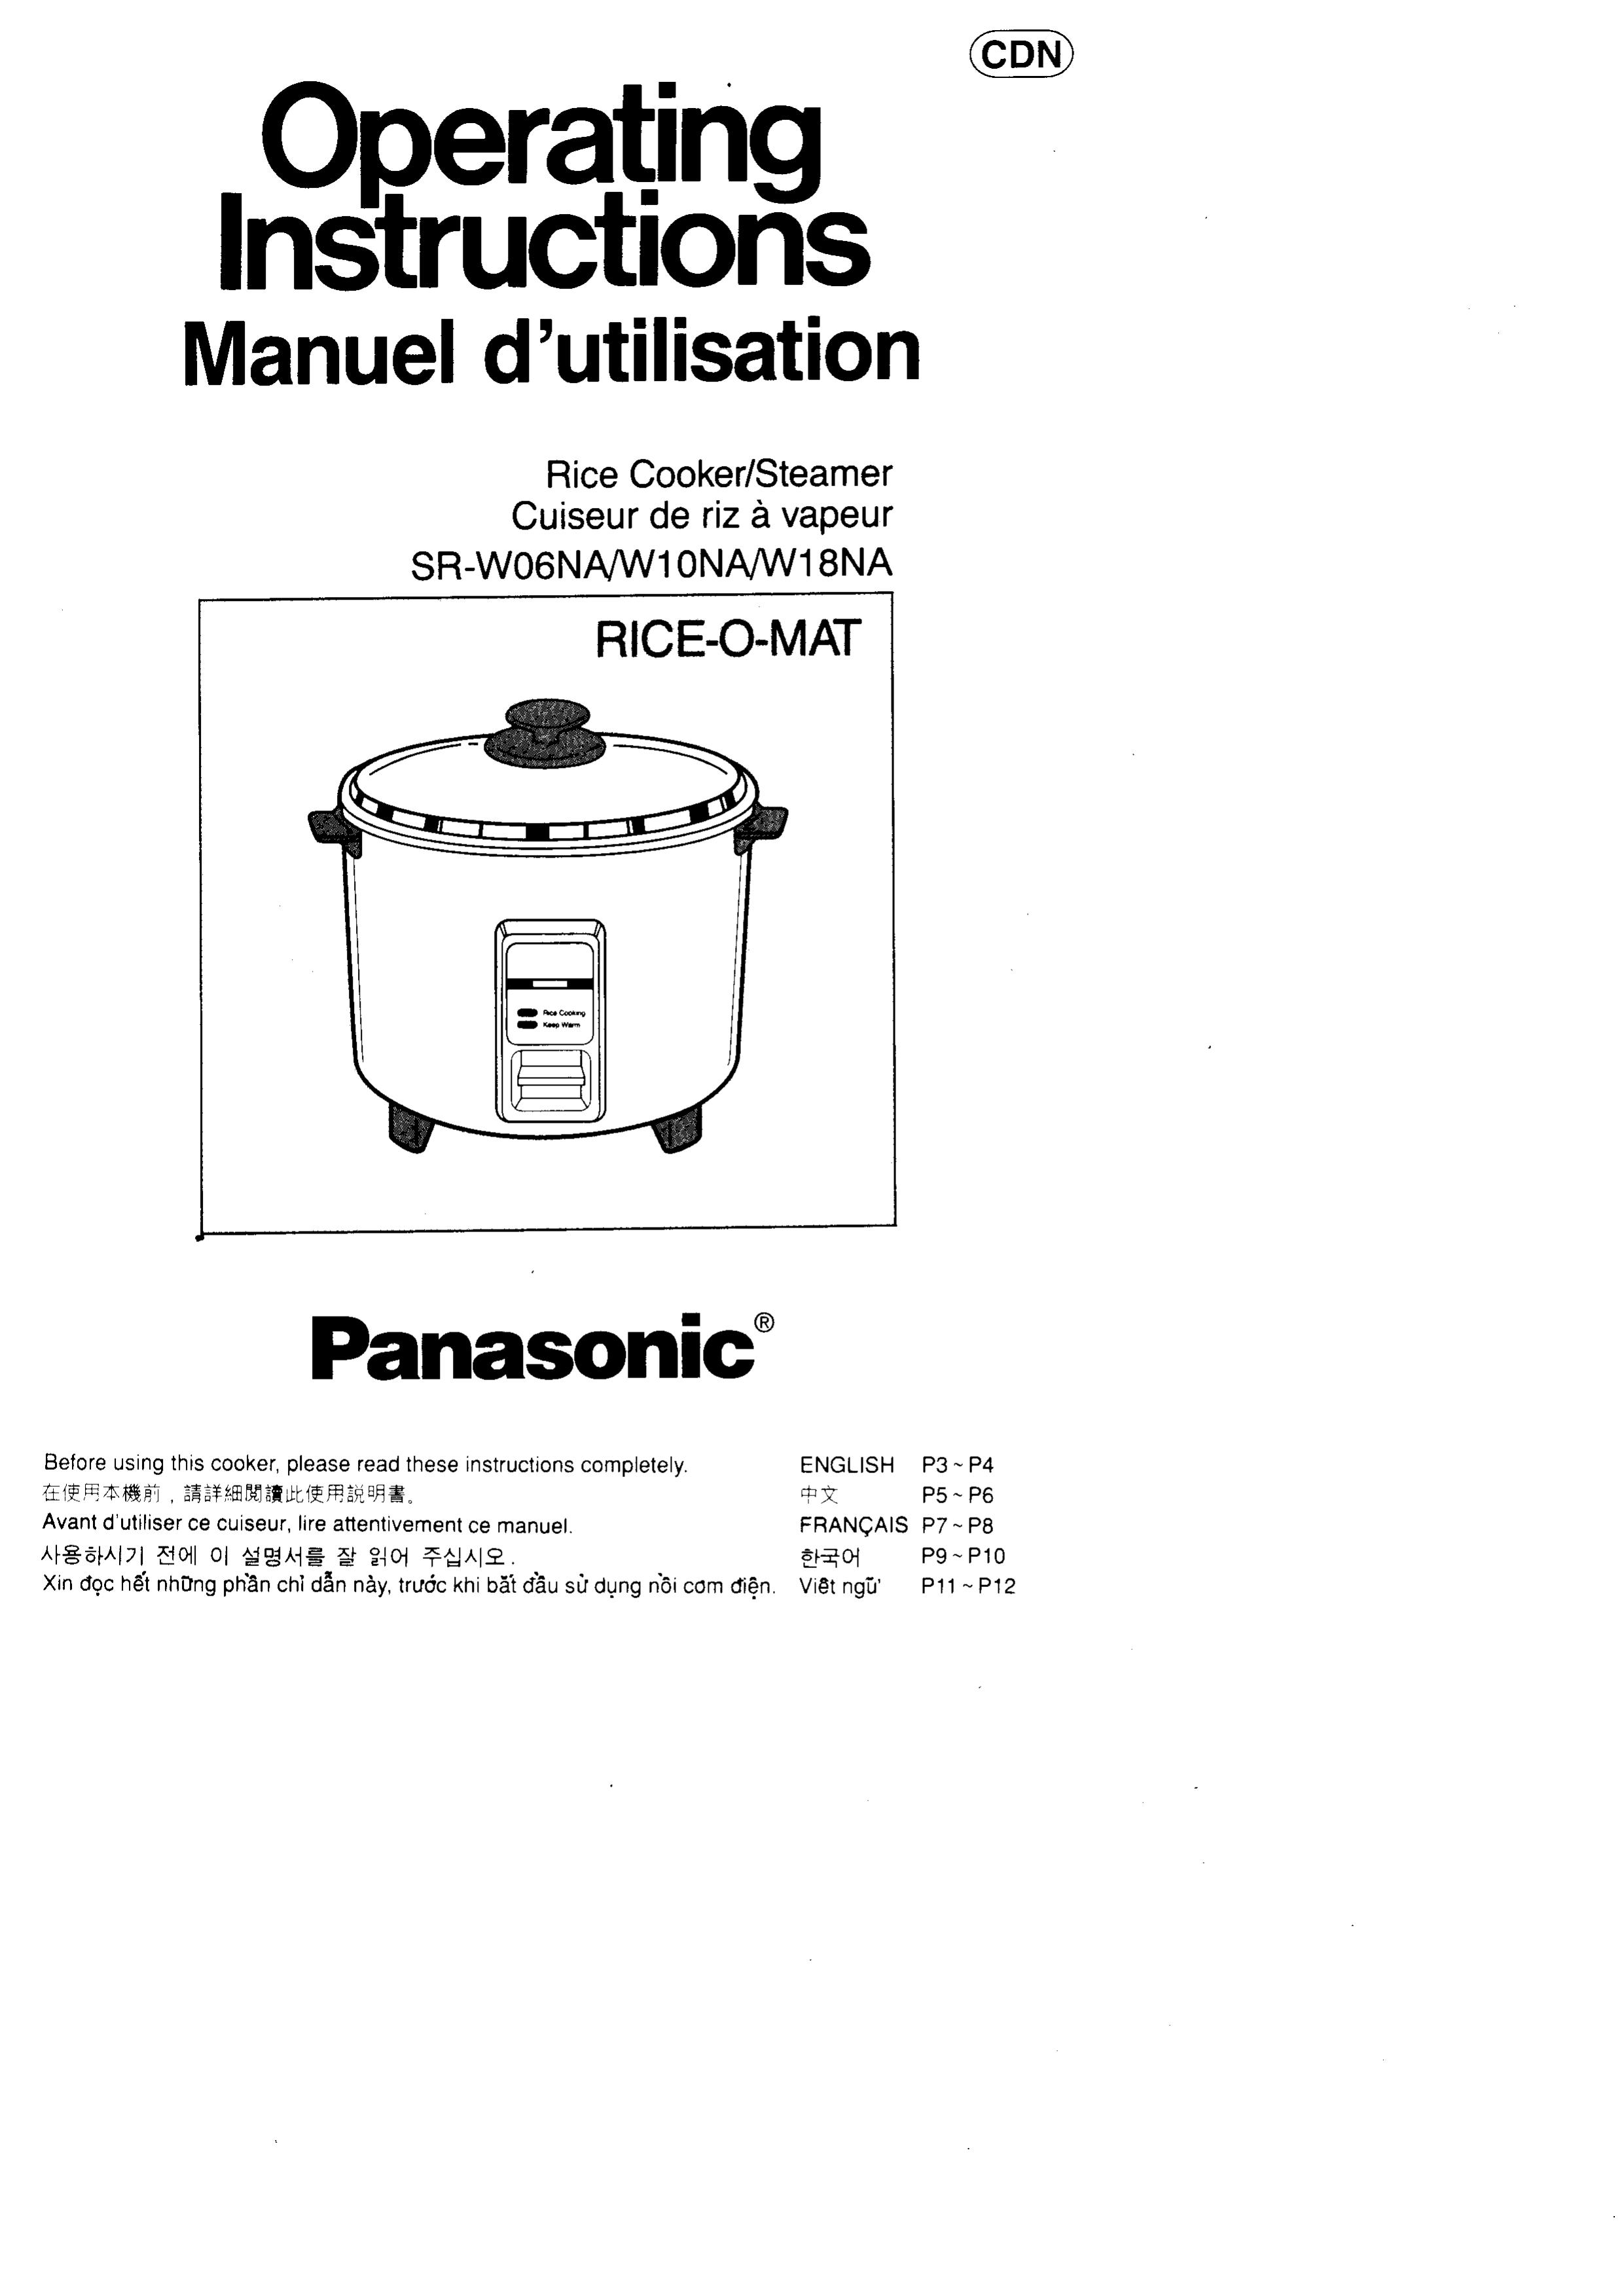 Panasonic SR-WO6NF Rice Cooker User Manual